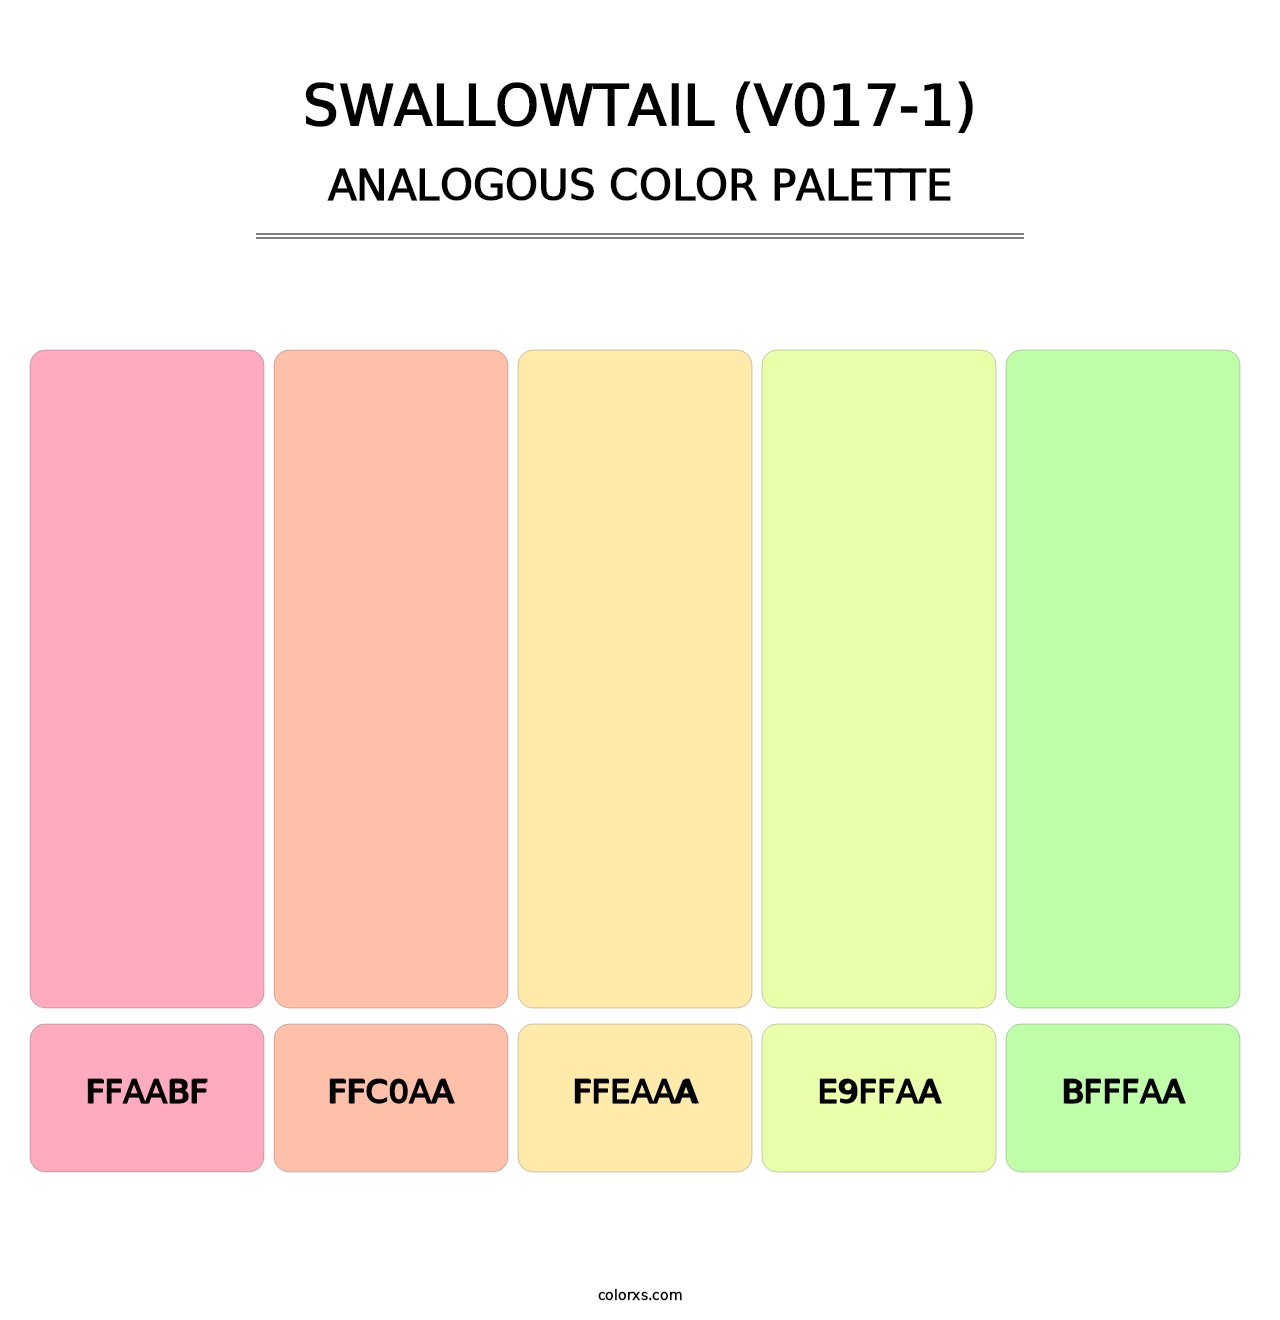 Swallowtail (V017-1) - Analogous Color Palette